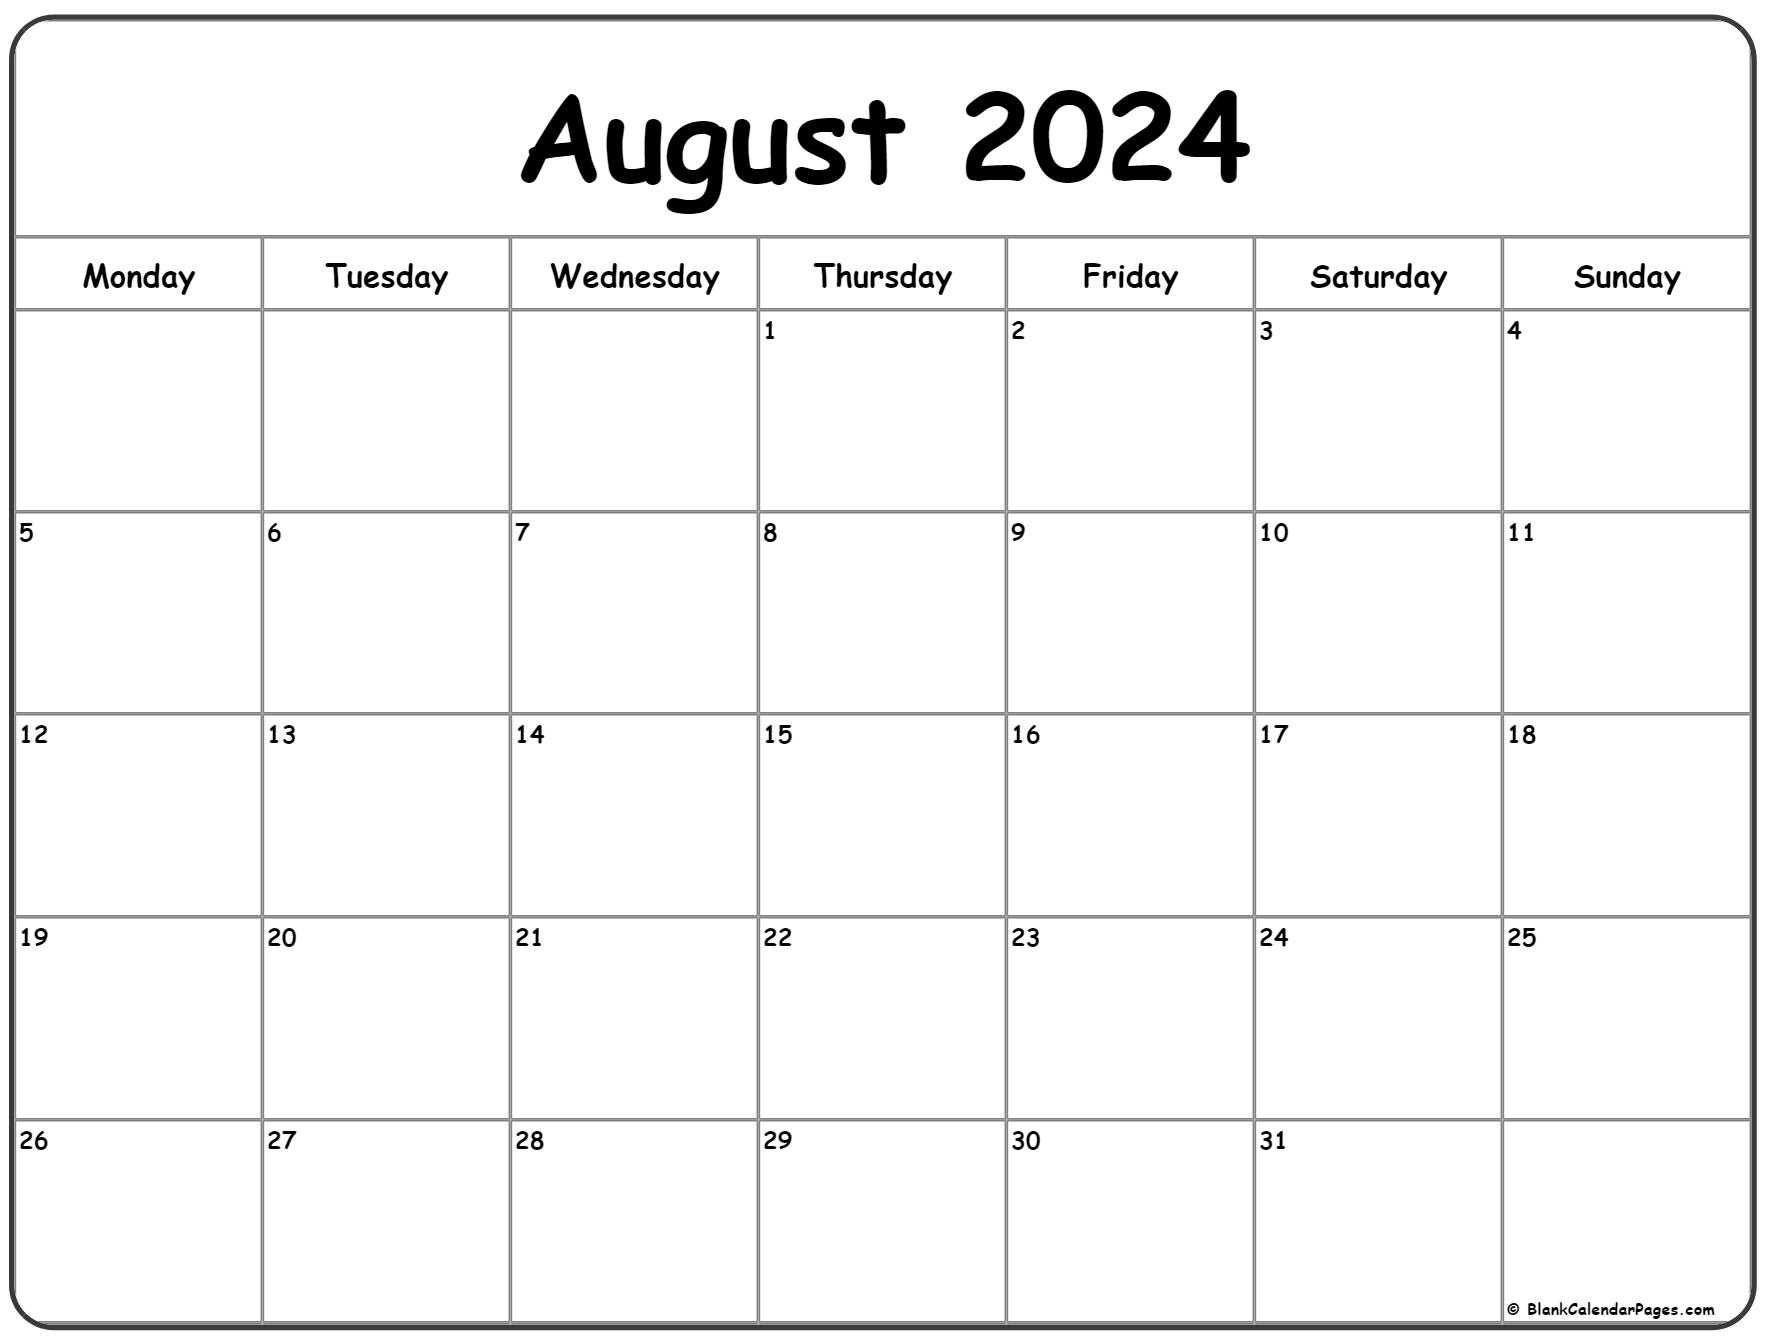 August 2024 Monday Calendar | Monday To Sunday for Blank August 2024 Calendar Printable